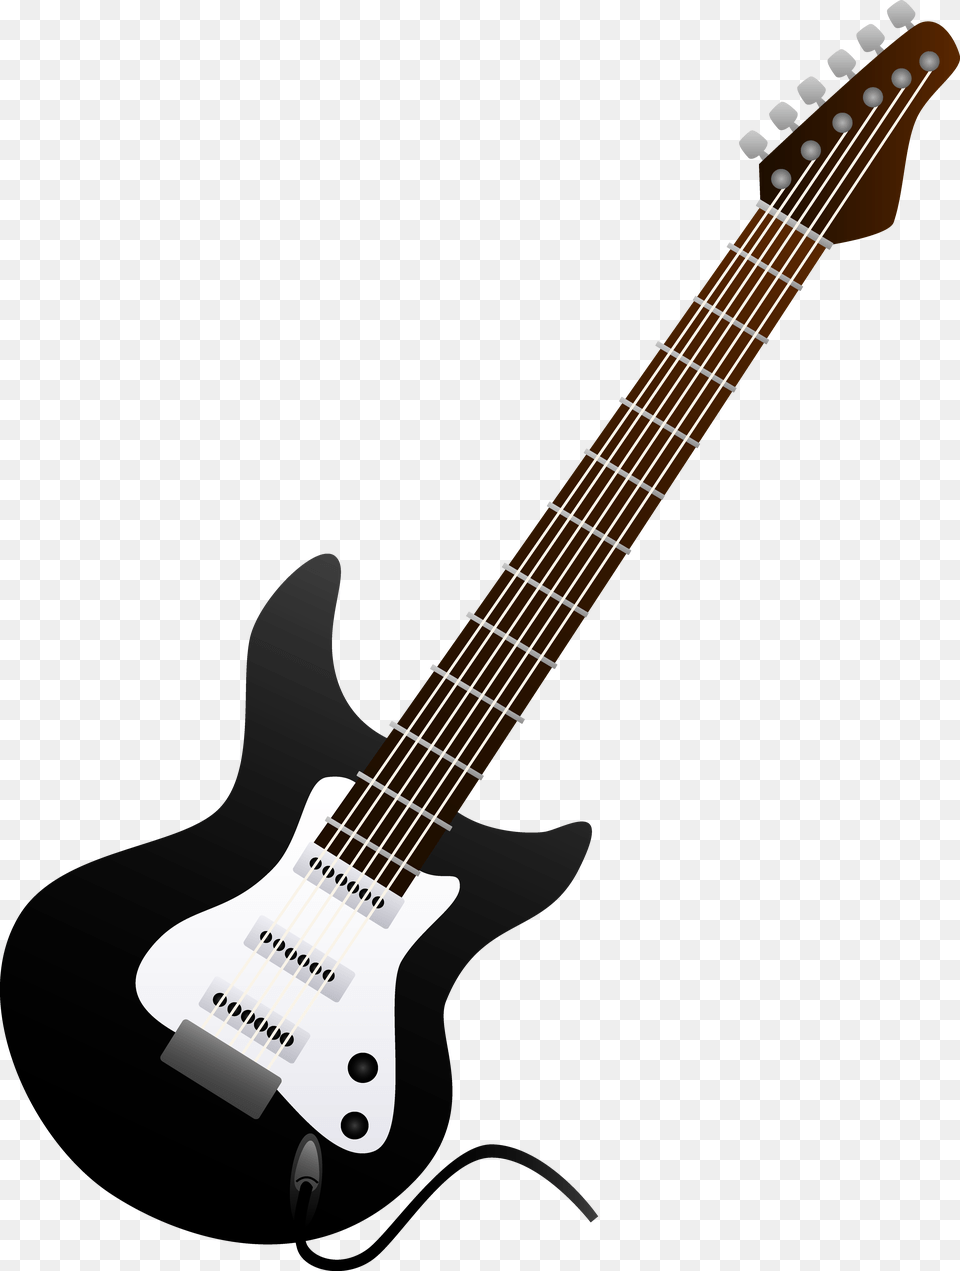 Guitar Black And White Bass Guitar Clipart Black And Electric Guitar Clipart, Electric Guitar, Musical Instrument, Bass Guitar Free Transparent Png